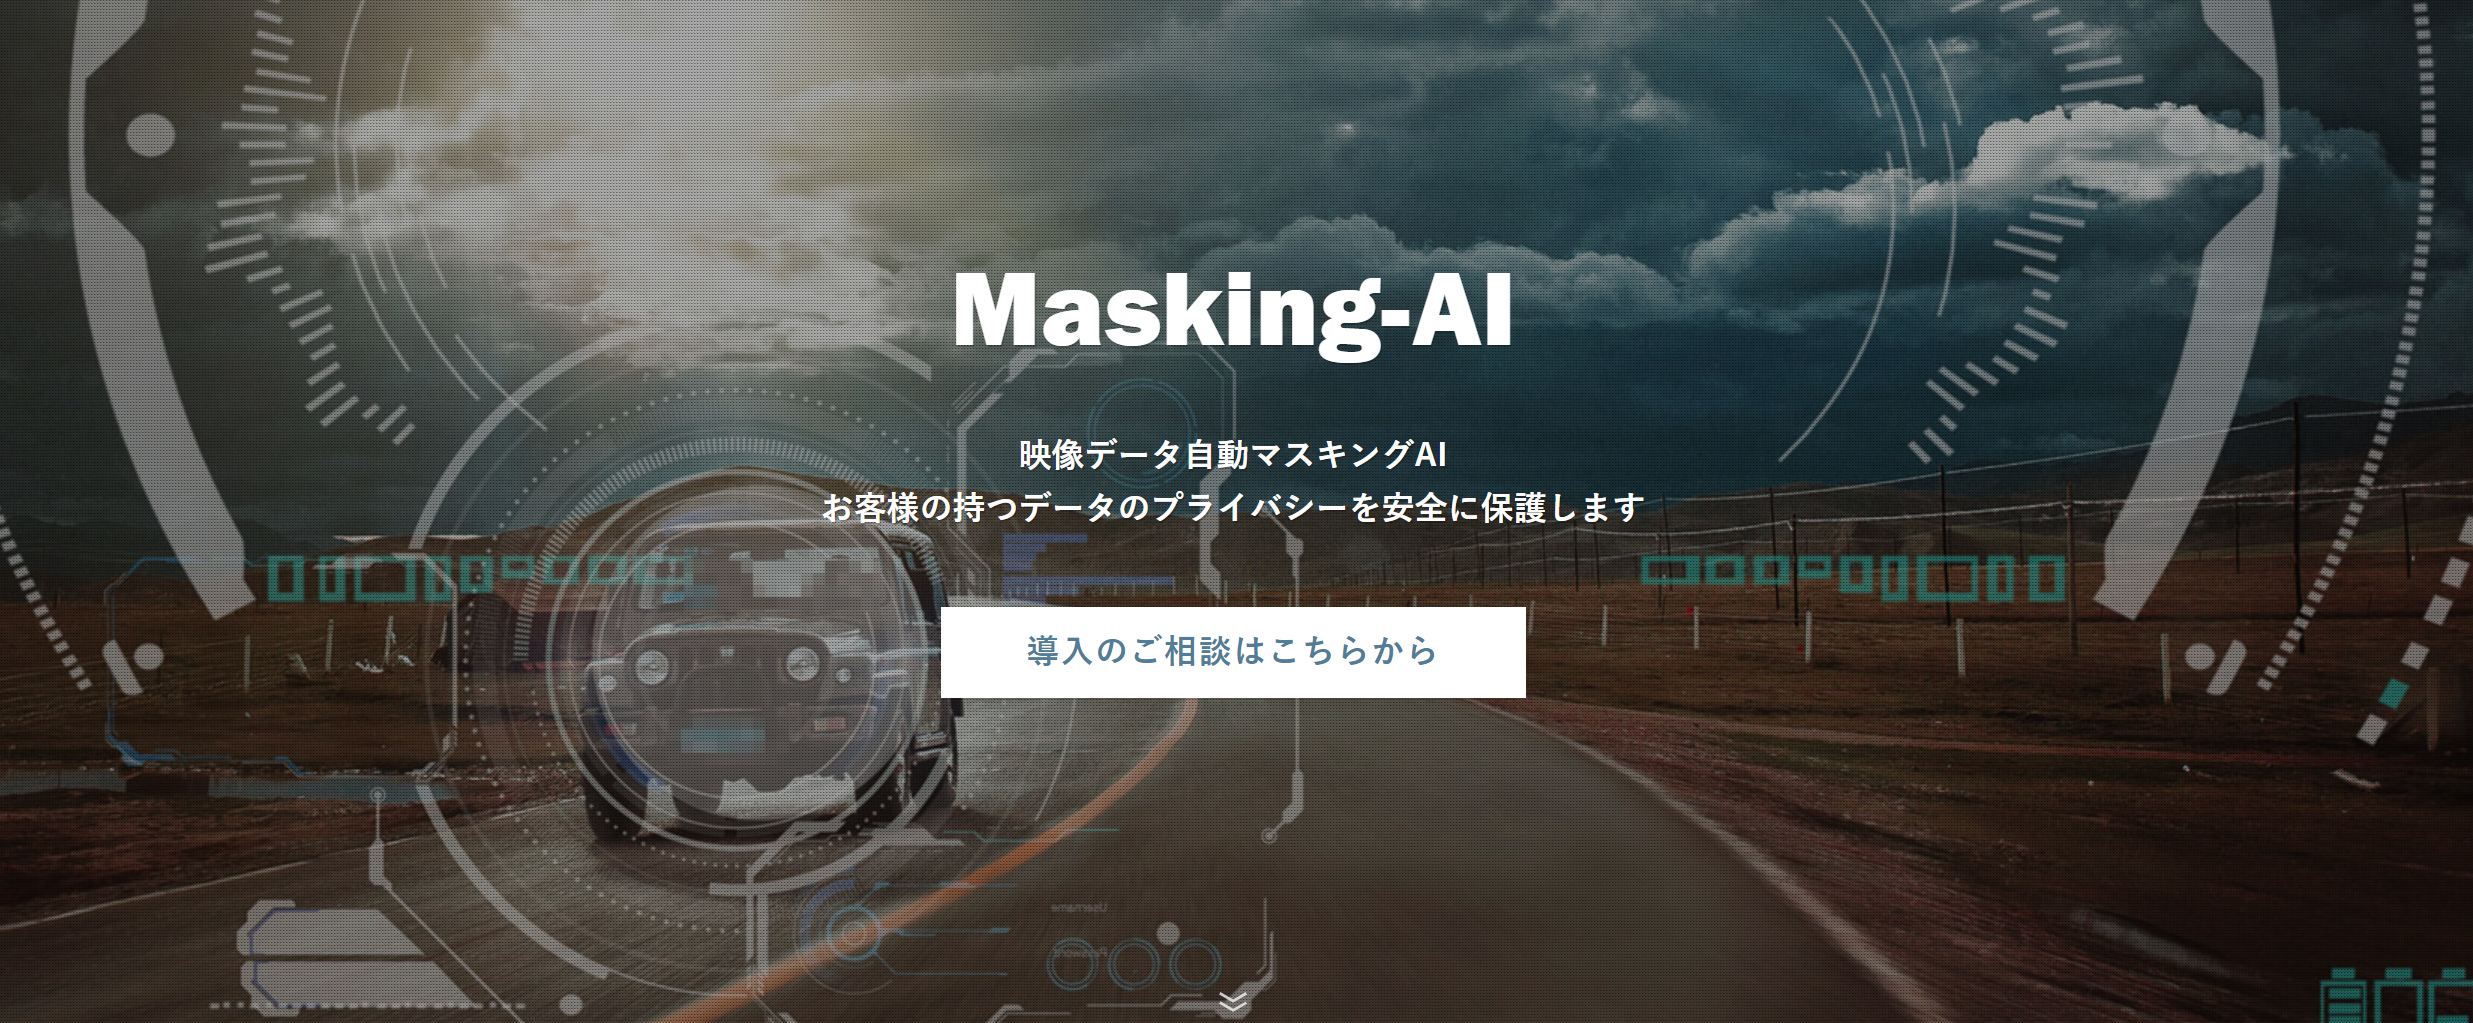 Masking-AI